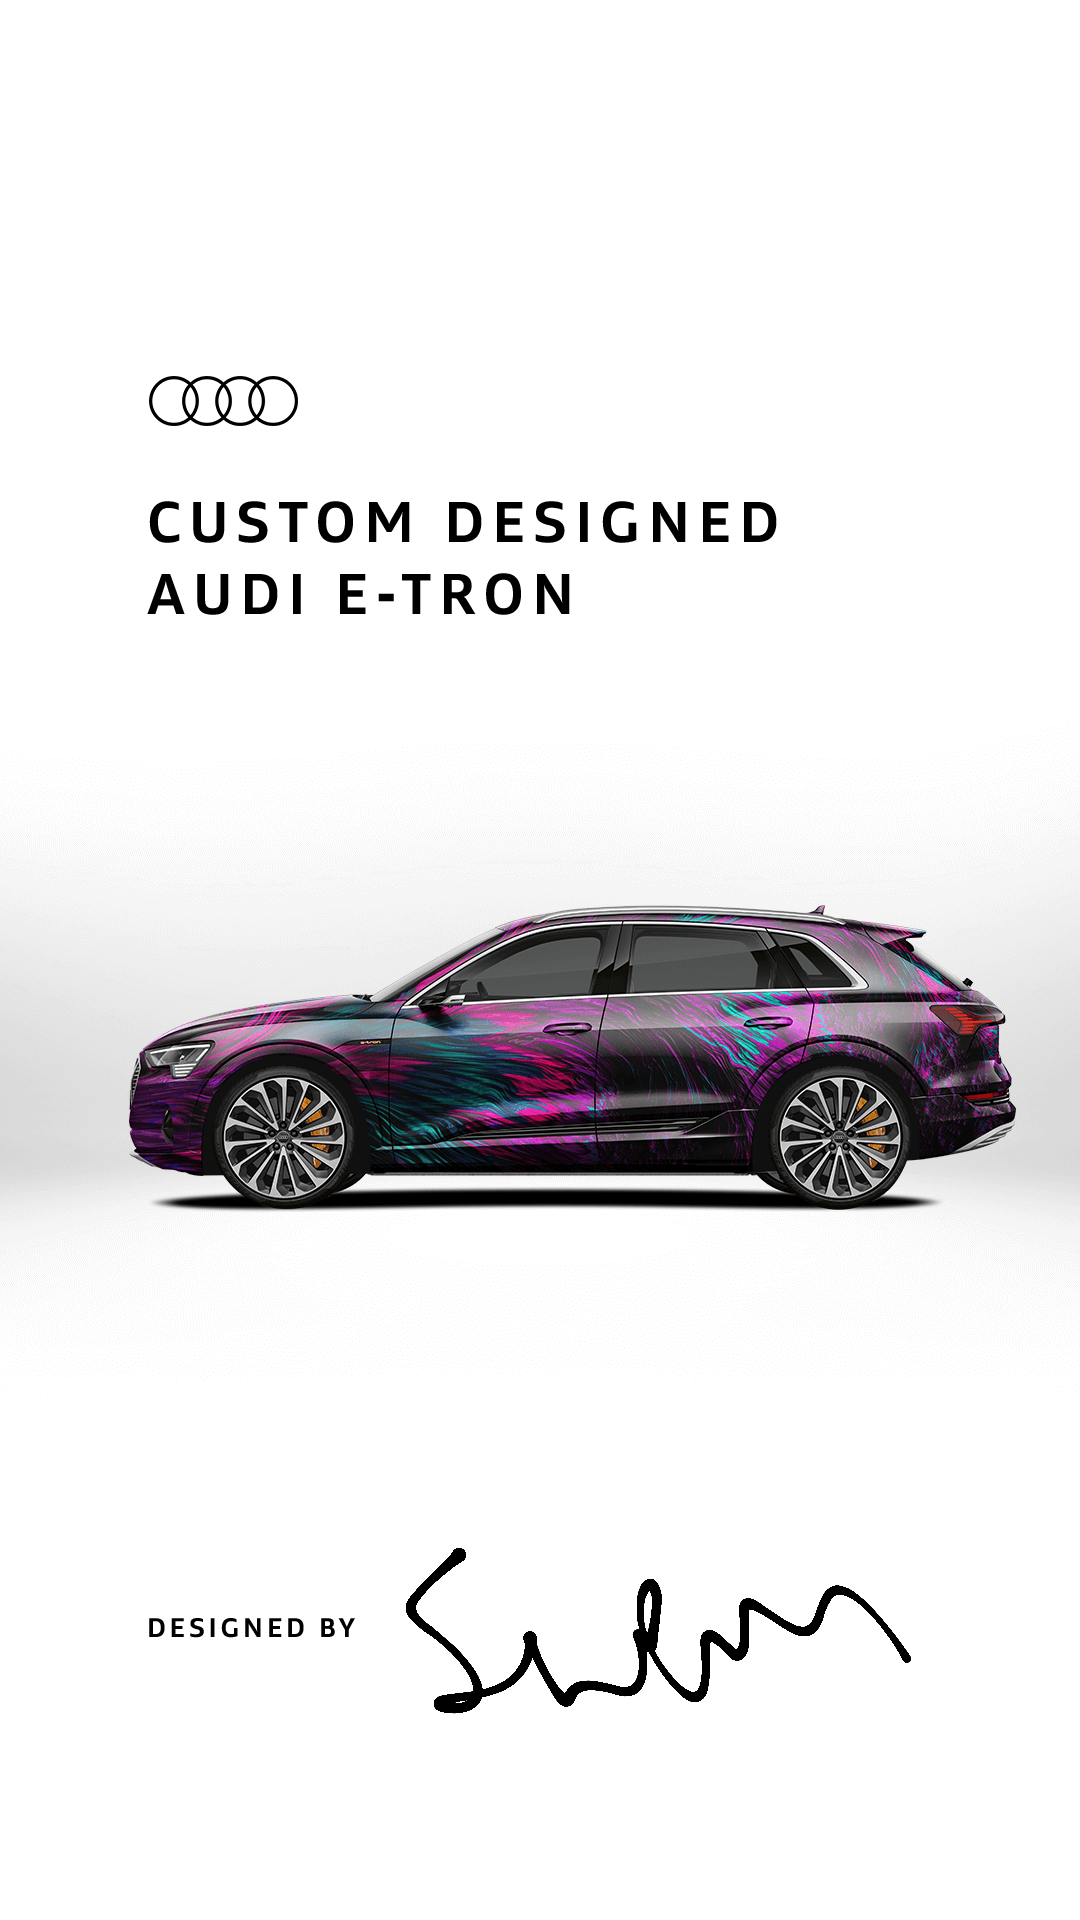 #custometron, Custom Audi e-tron social Campaign, Designed by Philipp Mandler